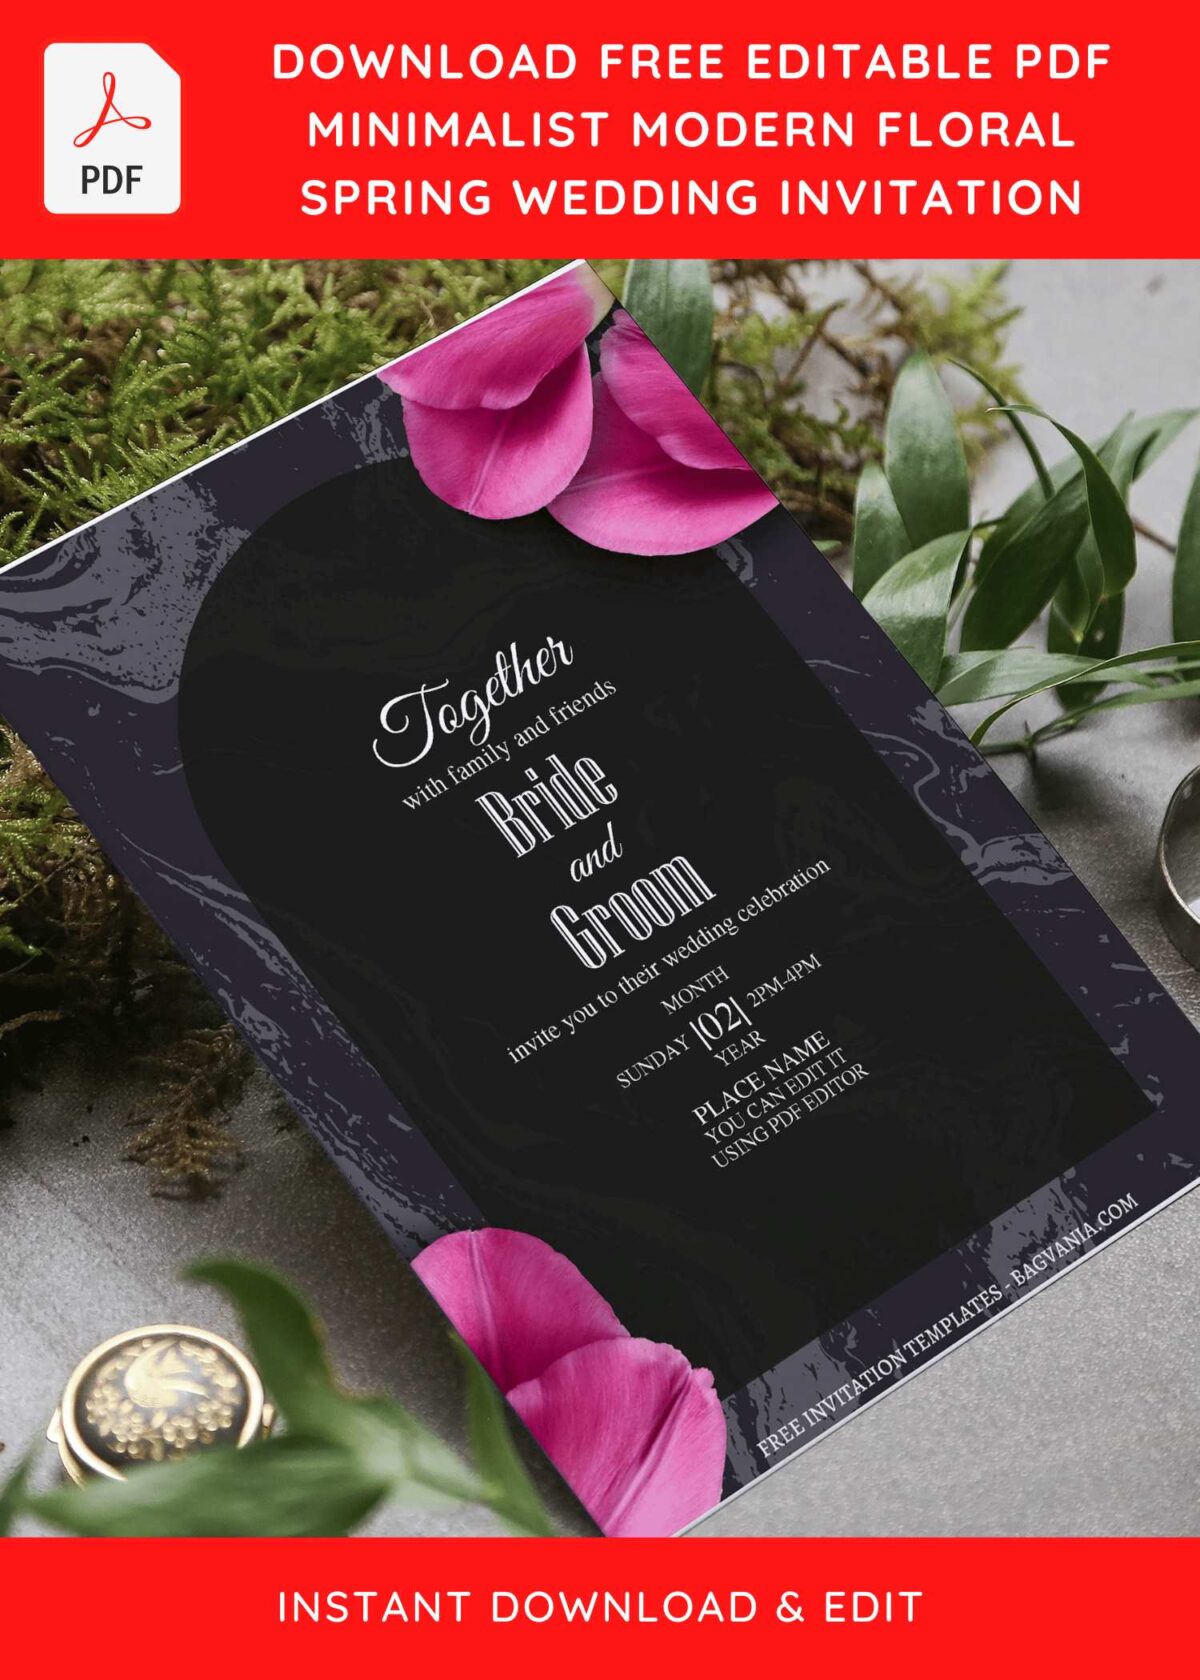 (Free Editable PDF) Luxury Black Marble Floral Wedding Invitation Templates with stunning flower petals